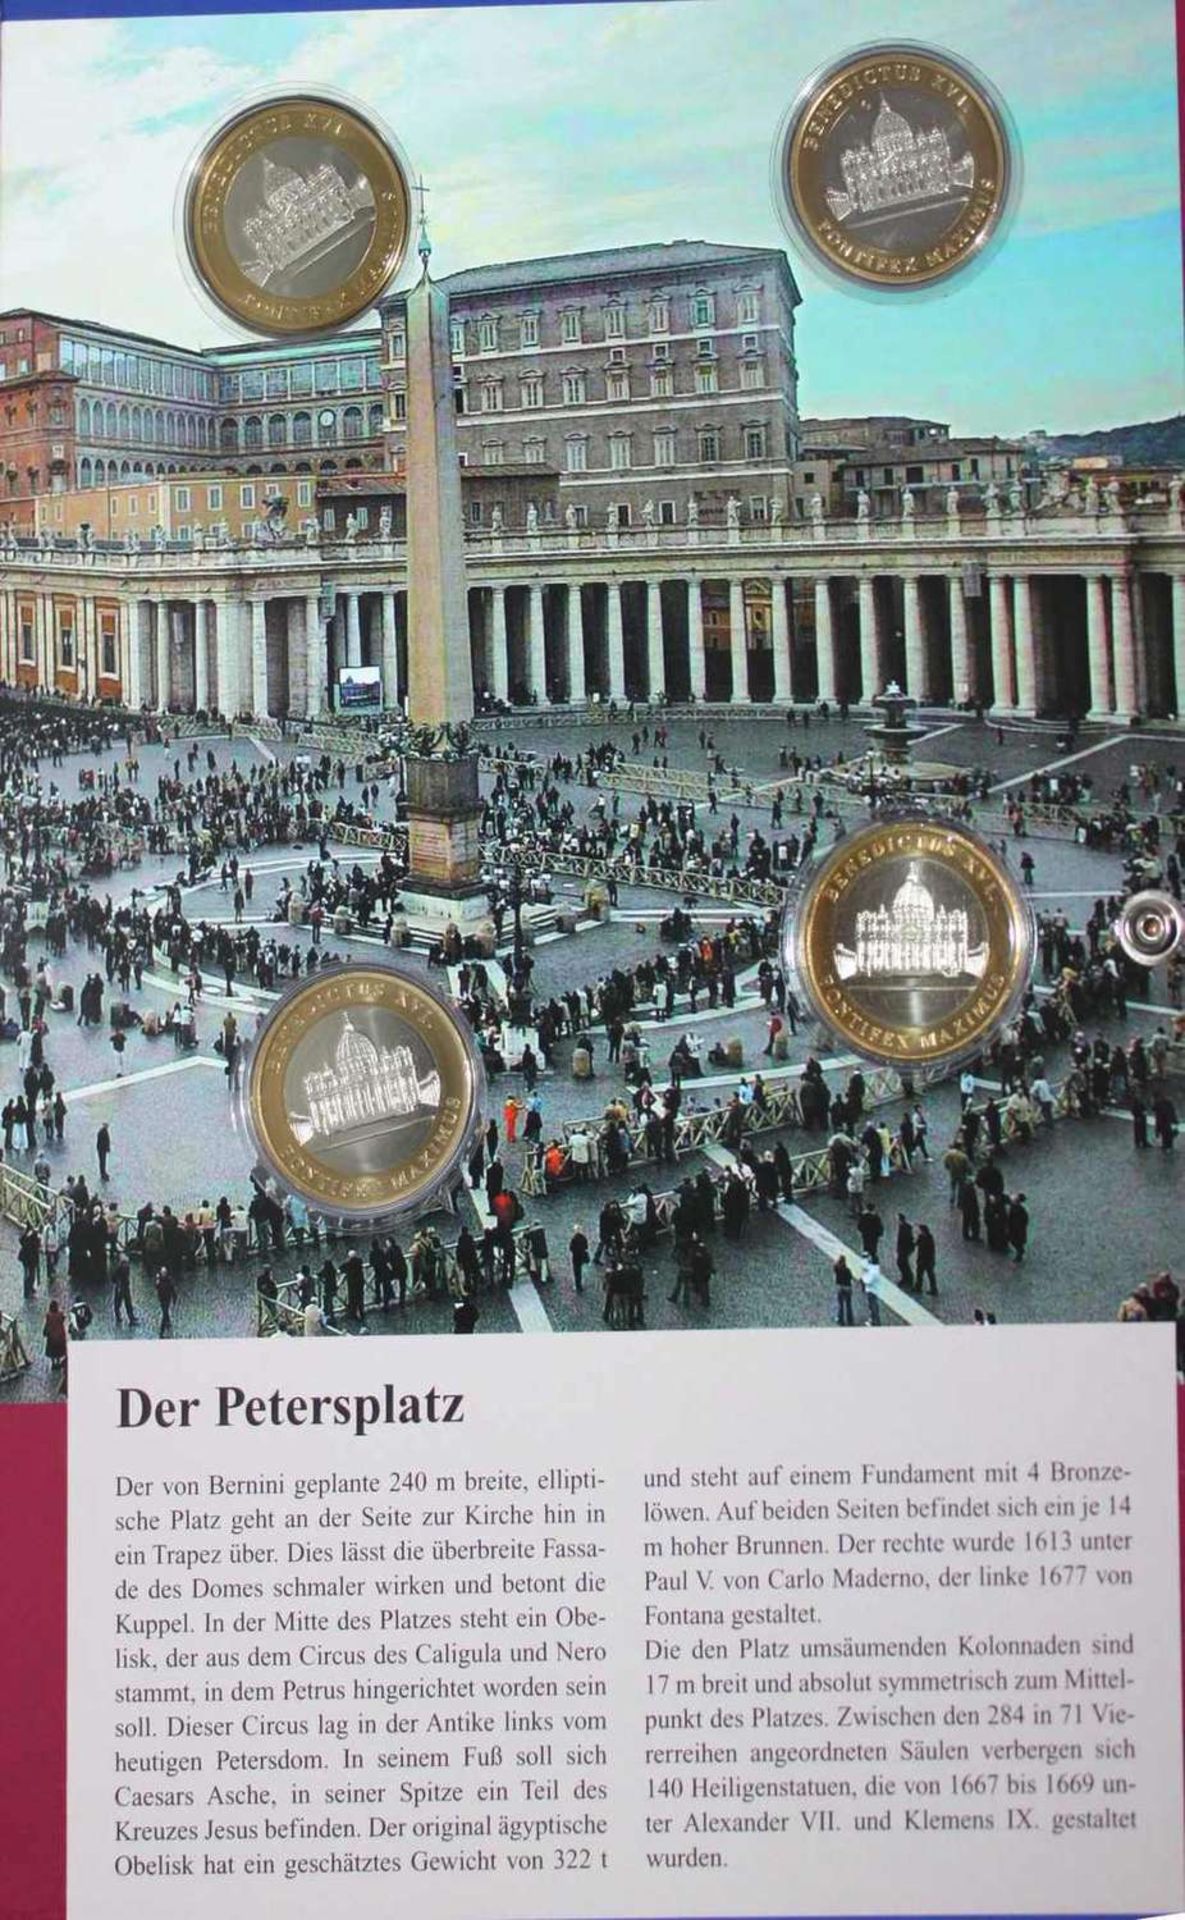 Medaillensatz "Papst Benedikt XVI", insgesamt 10 Medaillen, limitiert auf 5000 Stück. - Bild 2 aus 3